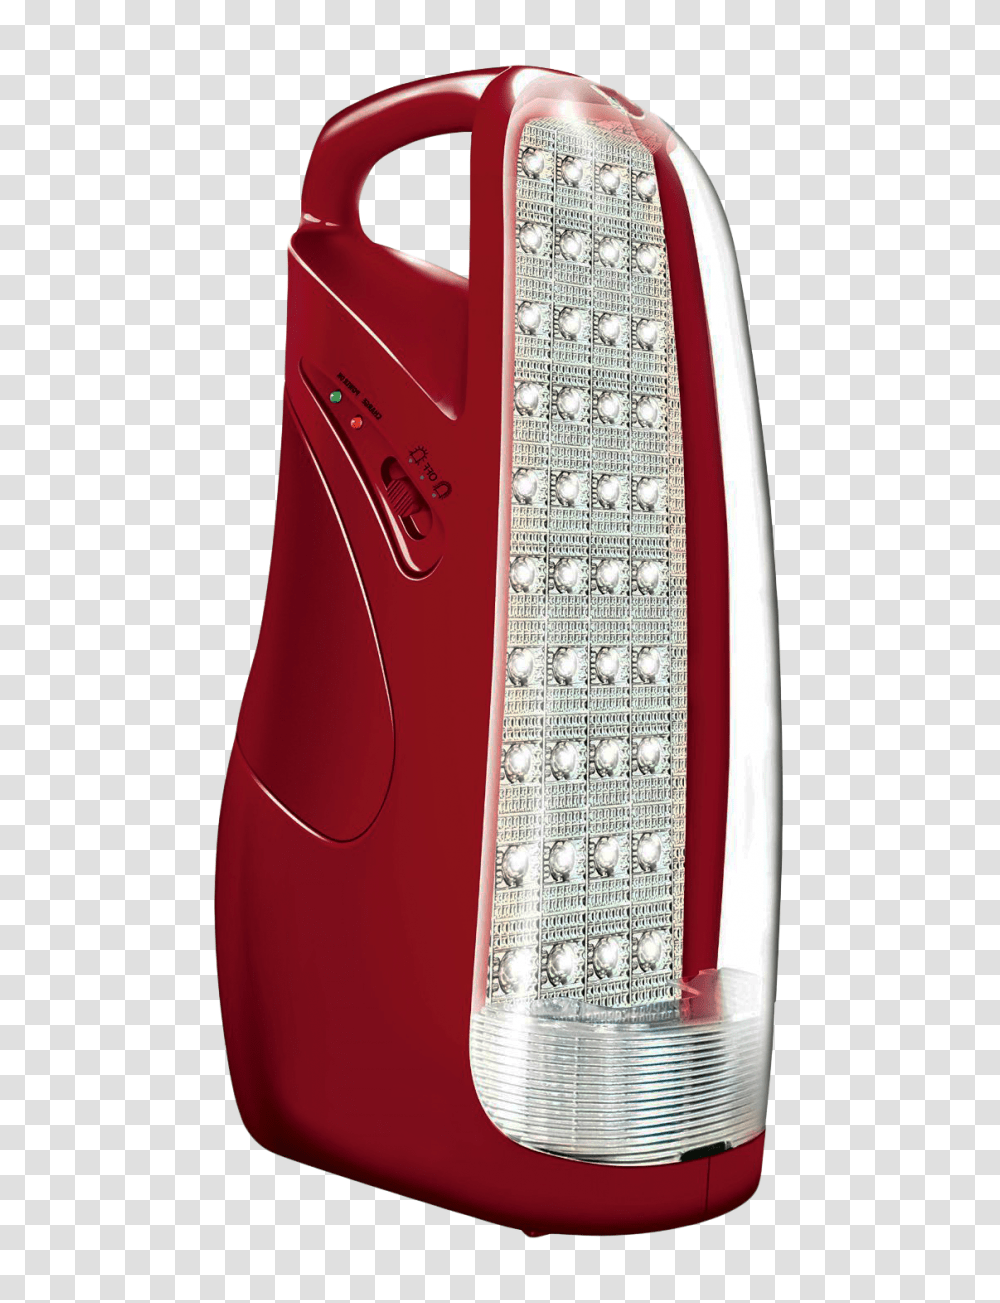 Emerg Light Image, Electronics, Appliance, Clothes Iron, Lamp Transparent Png